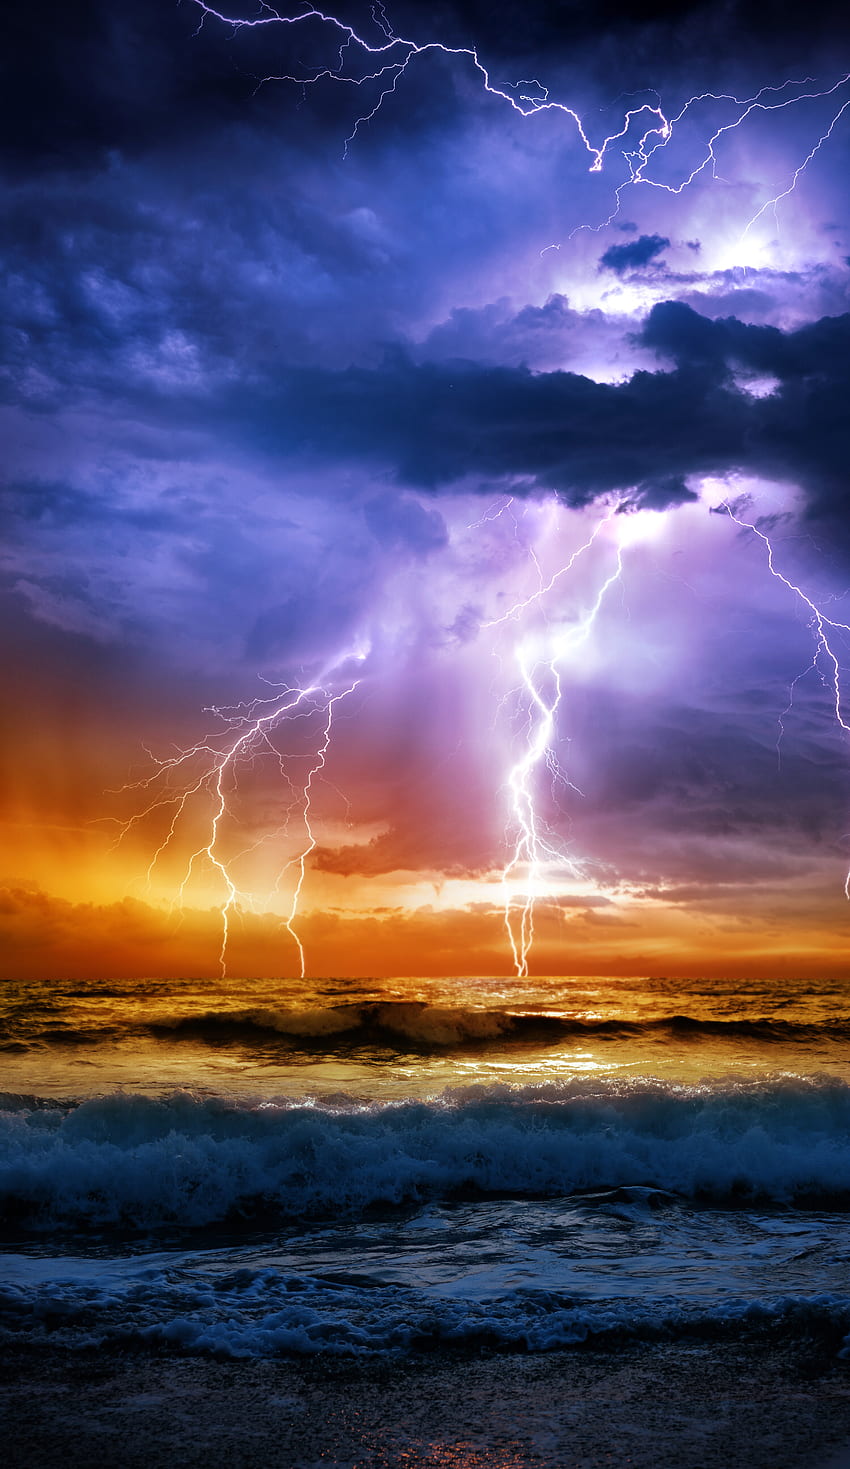 تدبروا القرآن الكريم on iPhone 6s Plus . Storm graphy, Amazing nature, art prints, Bad Weather HD phone wallpaper